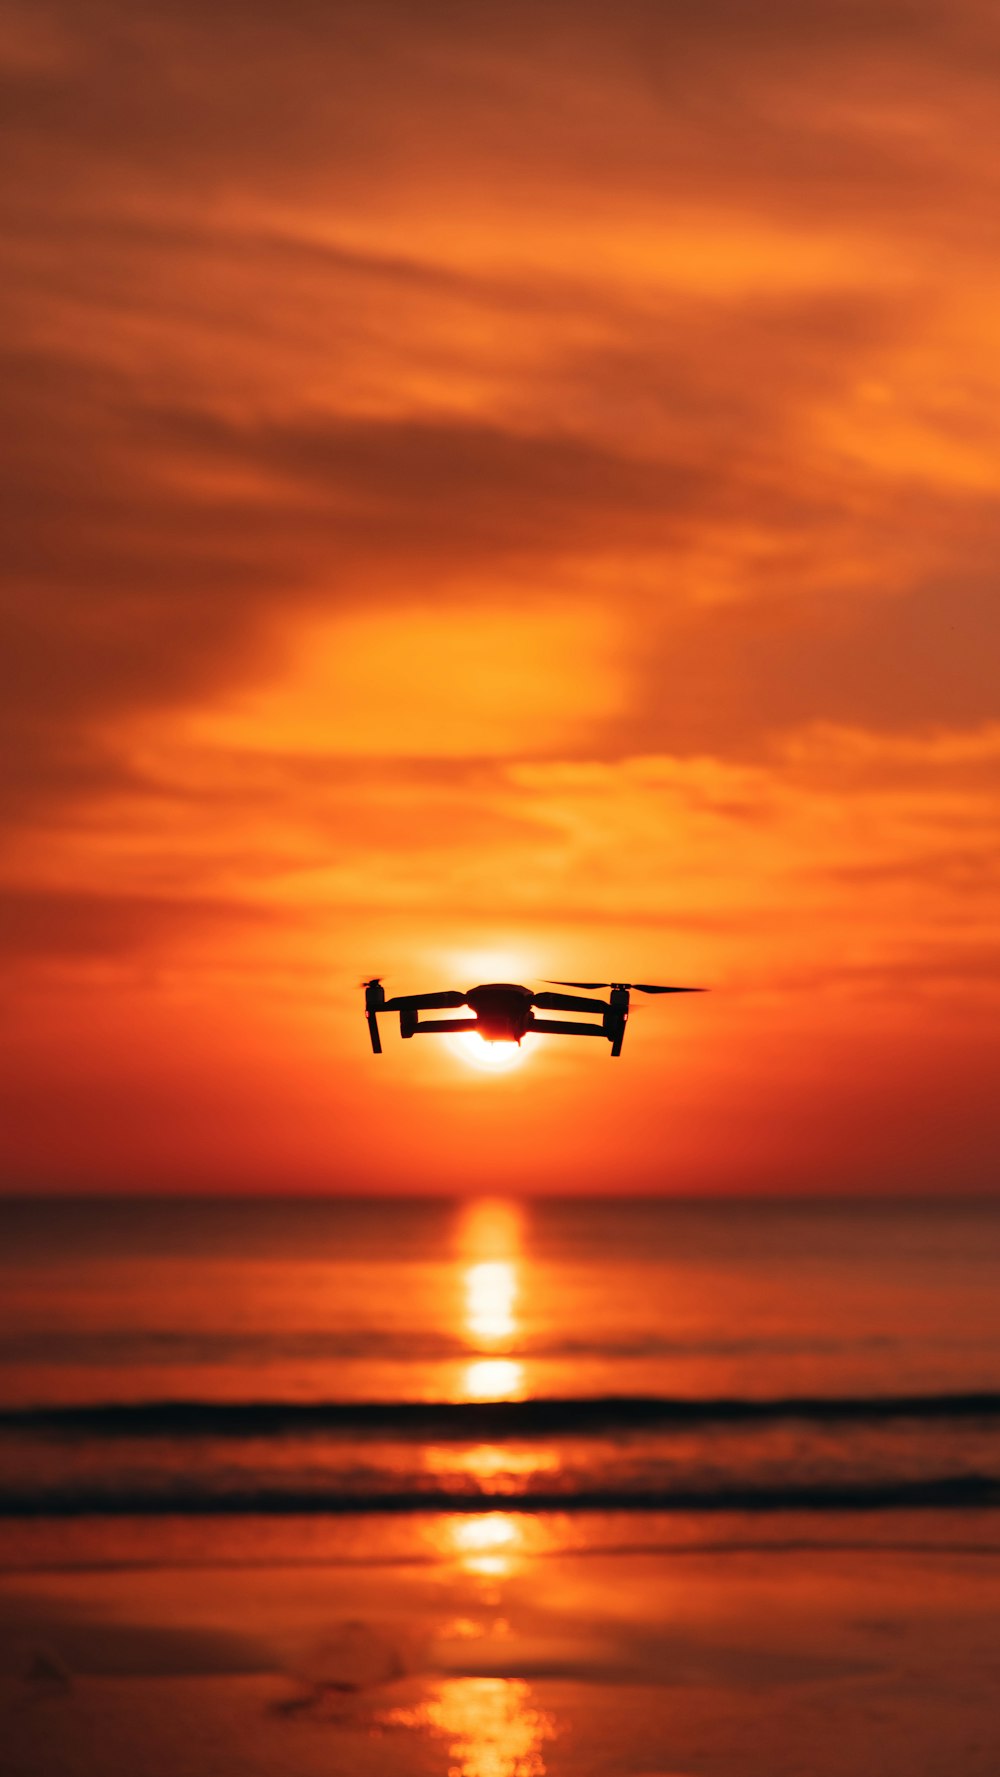 Un aereo che sorvola l'oceano al tramonto